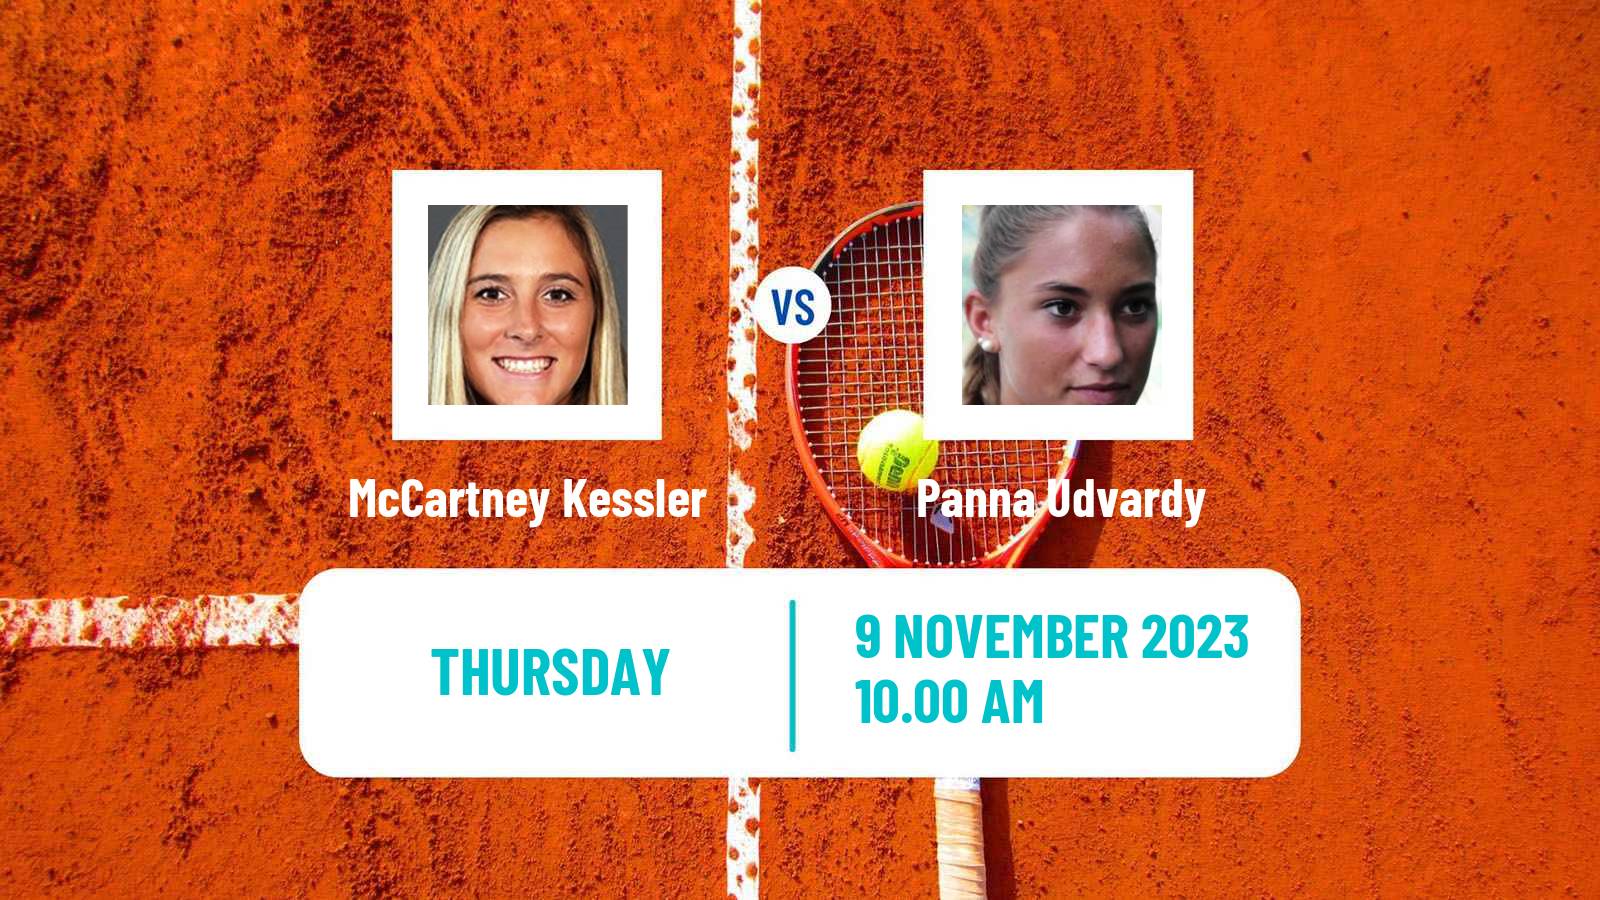 Tennis ITF W100 Charleston Sc 2 Women McCartney Kessler - Panna Udvardy